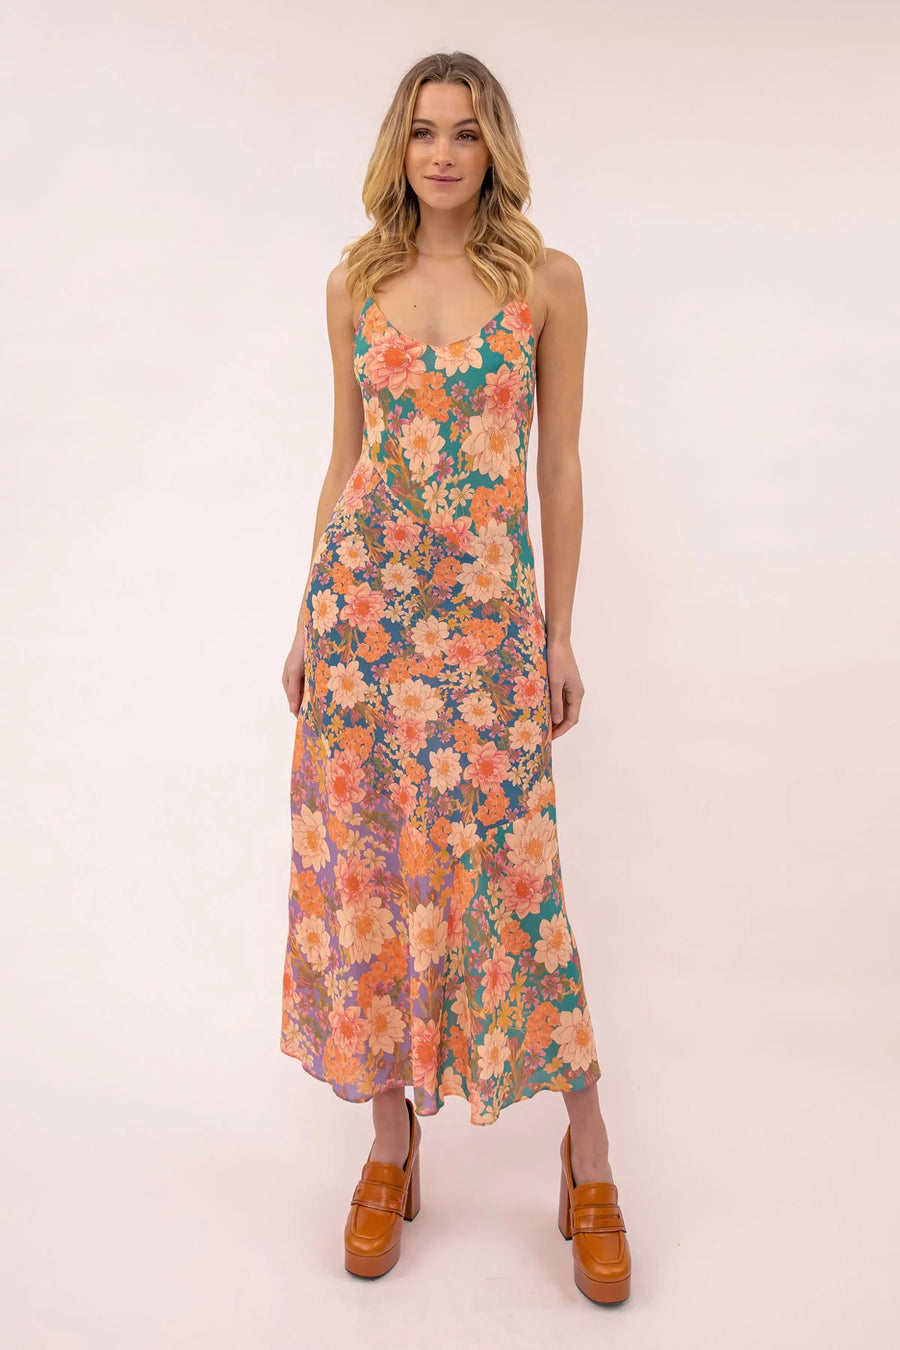 Kachel Christina Floral Midi Slip Dress - Multi